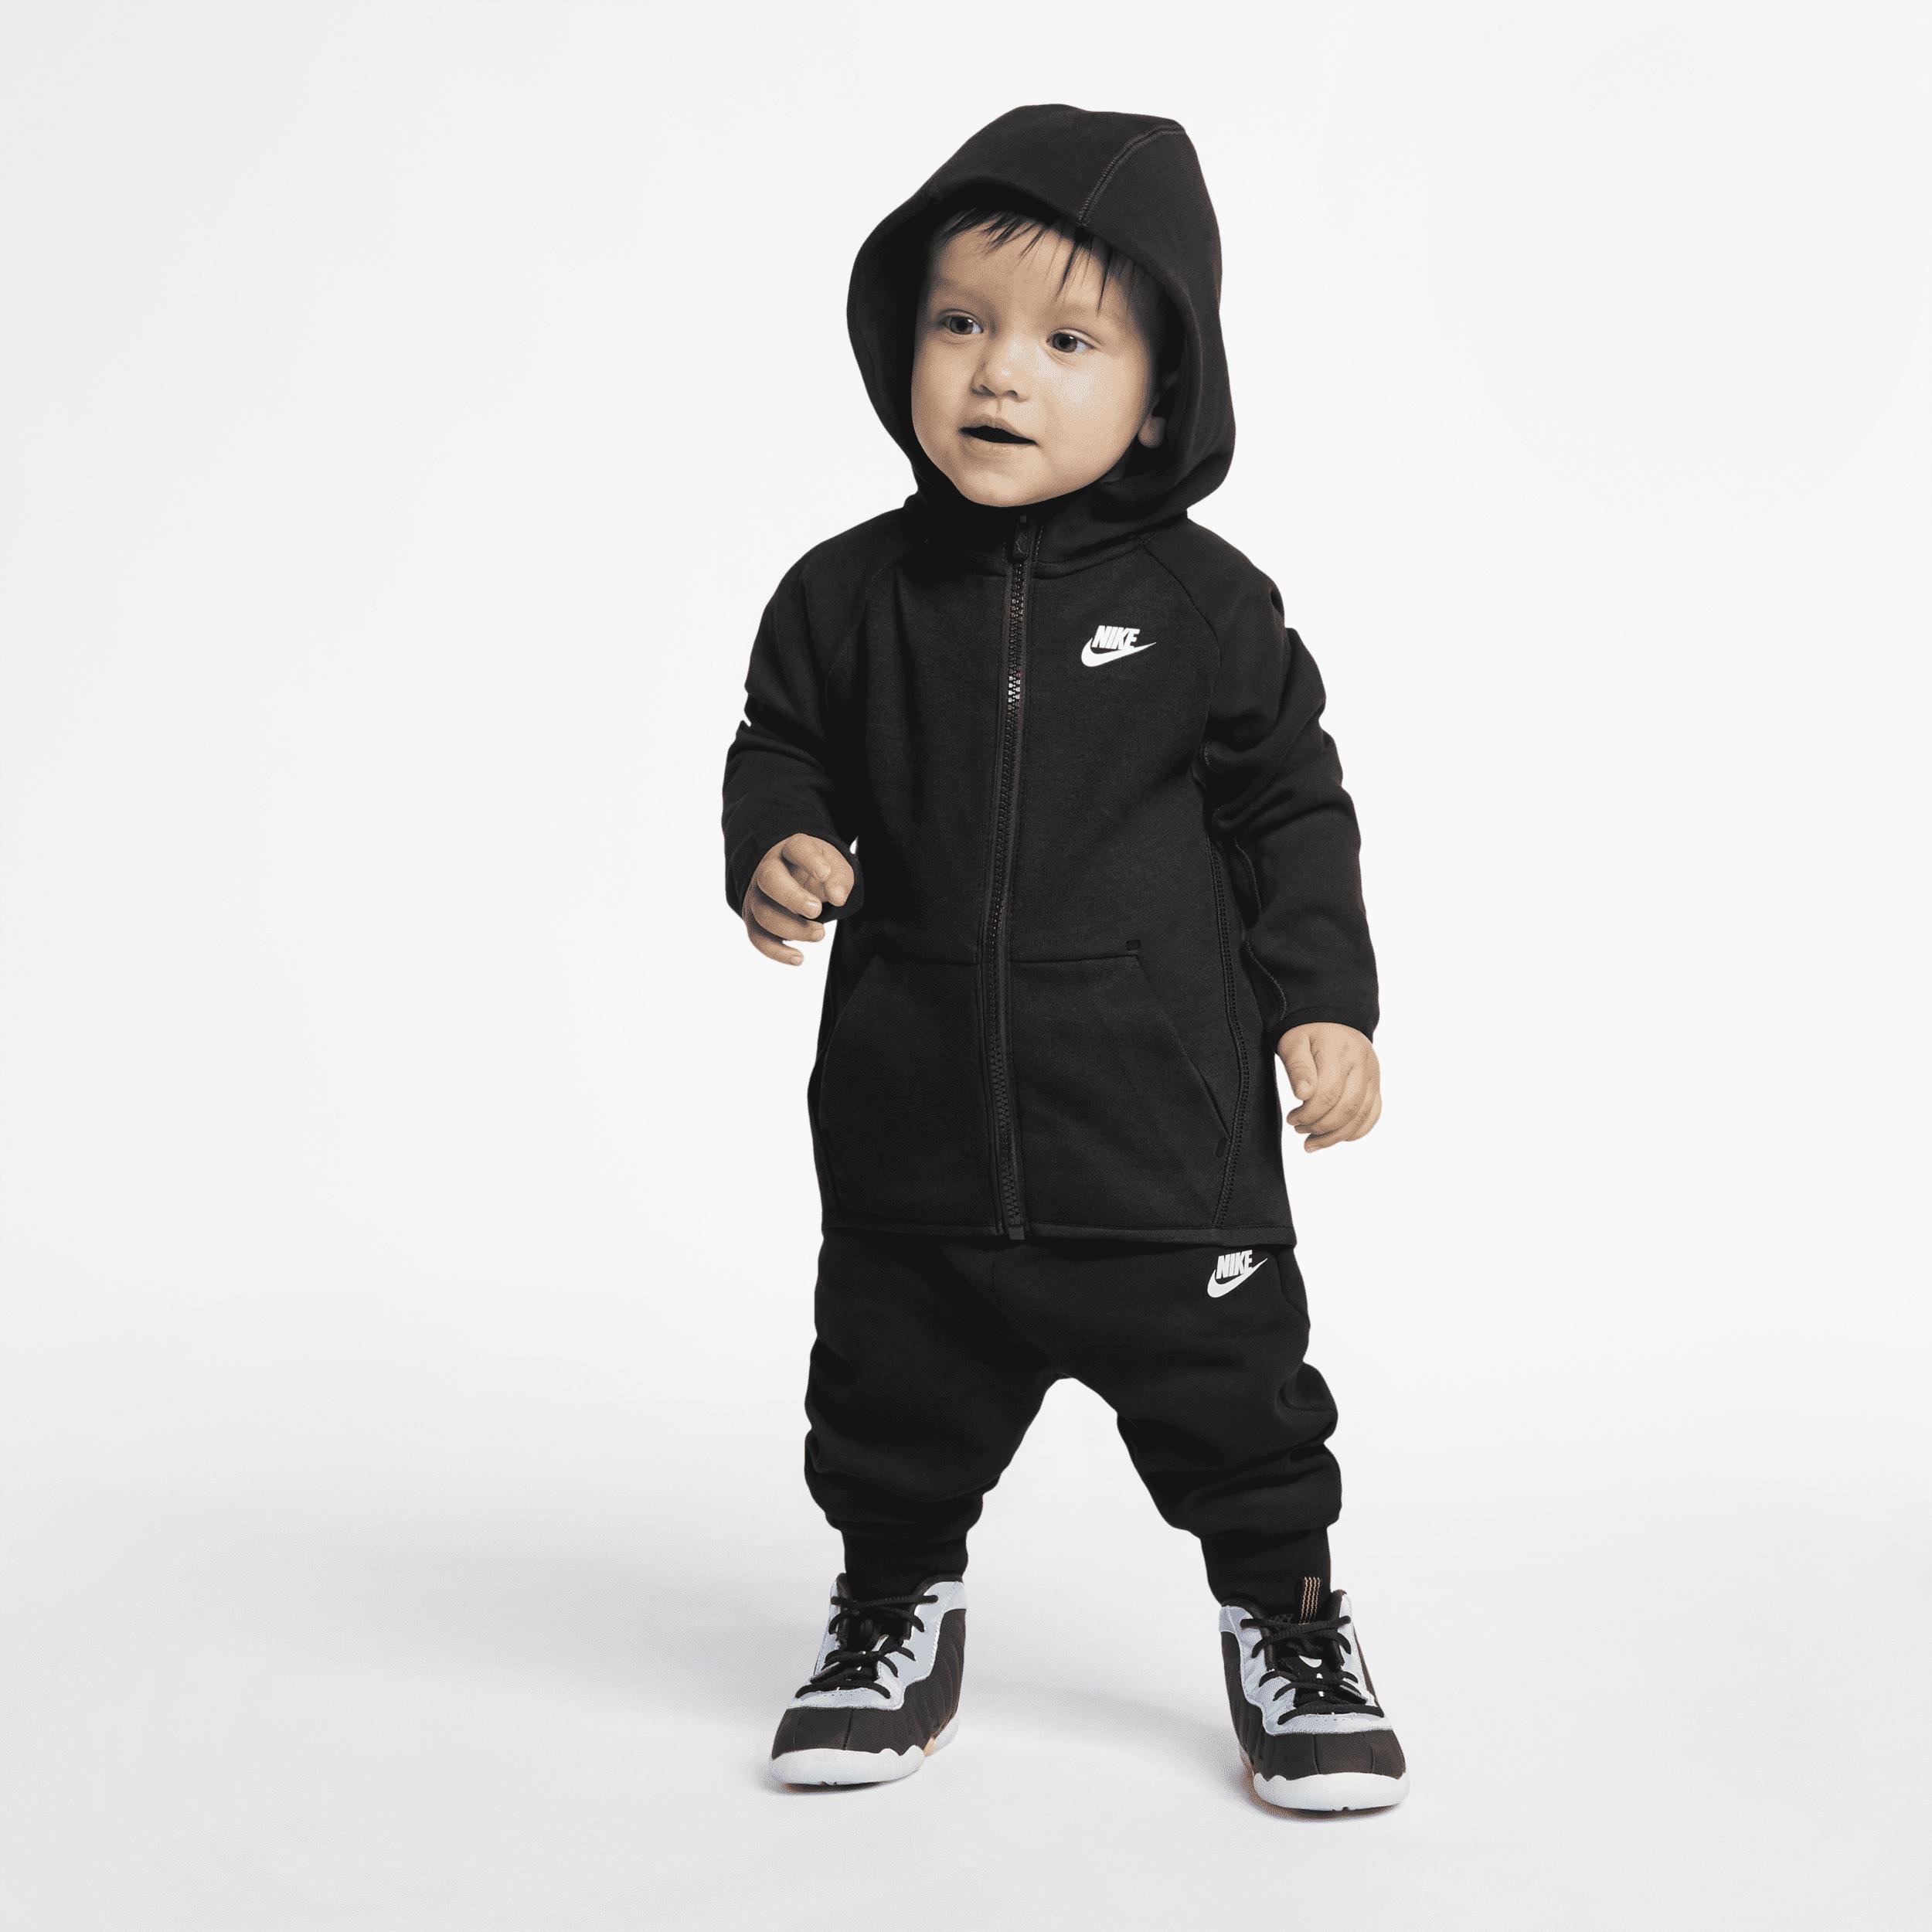 Nike Sportswear Tech Fleece Baby (12-24M) Hoodie and Pants Set by NIKE